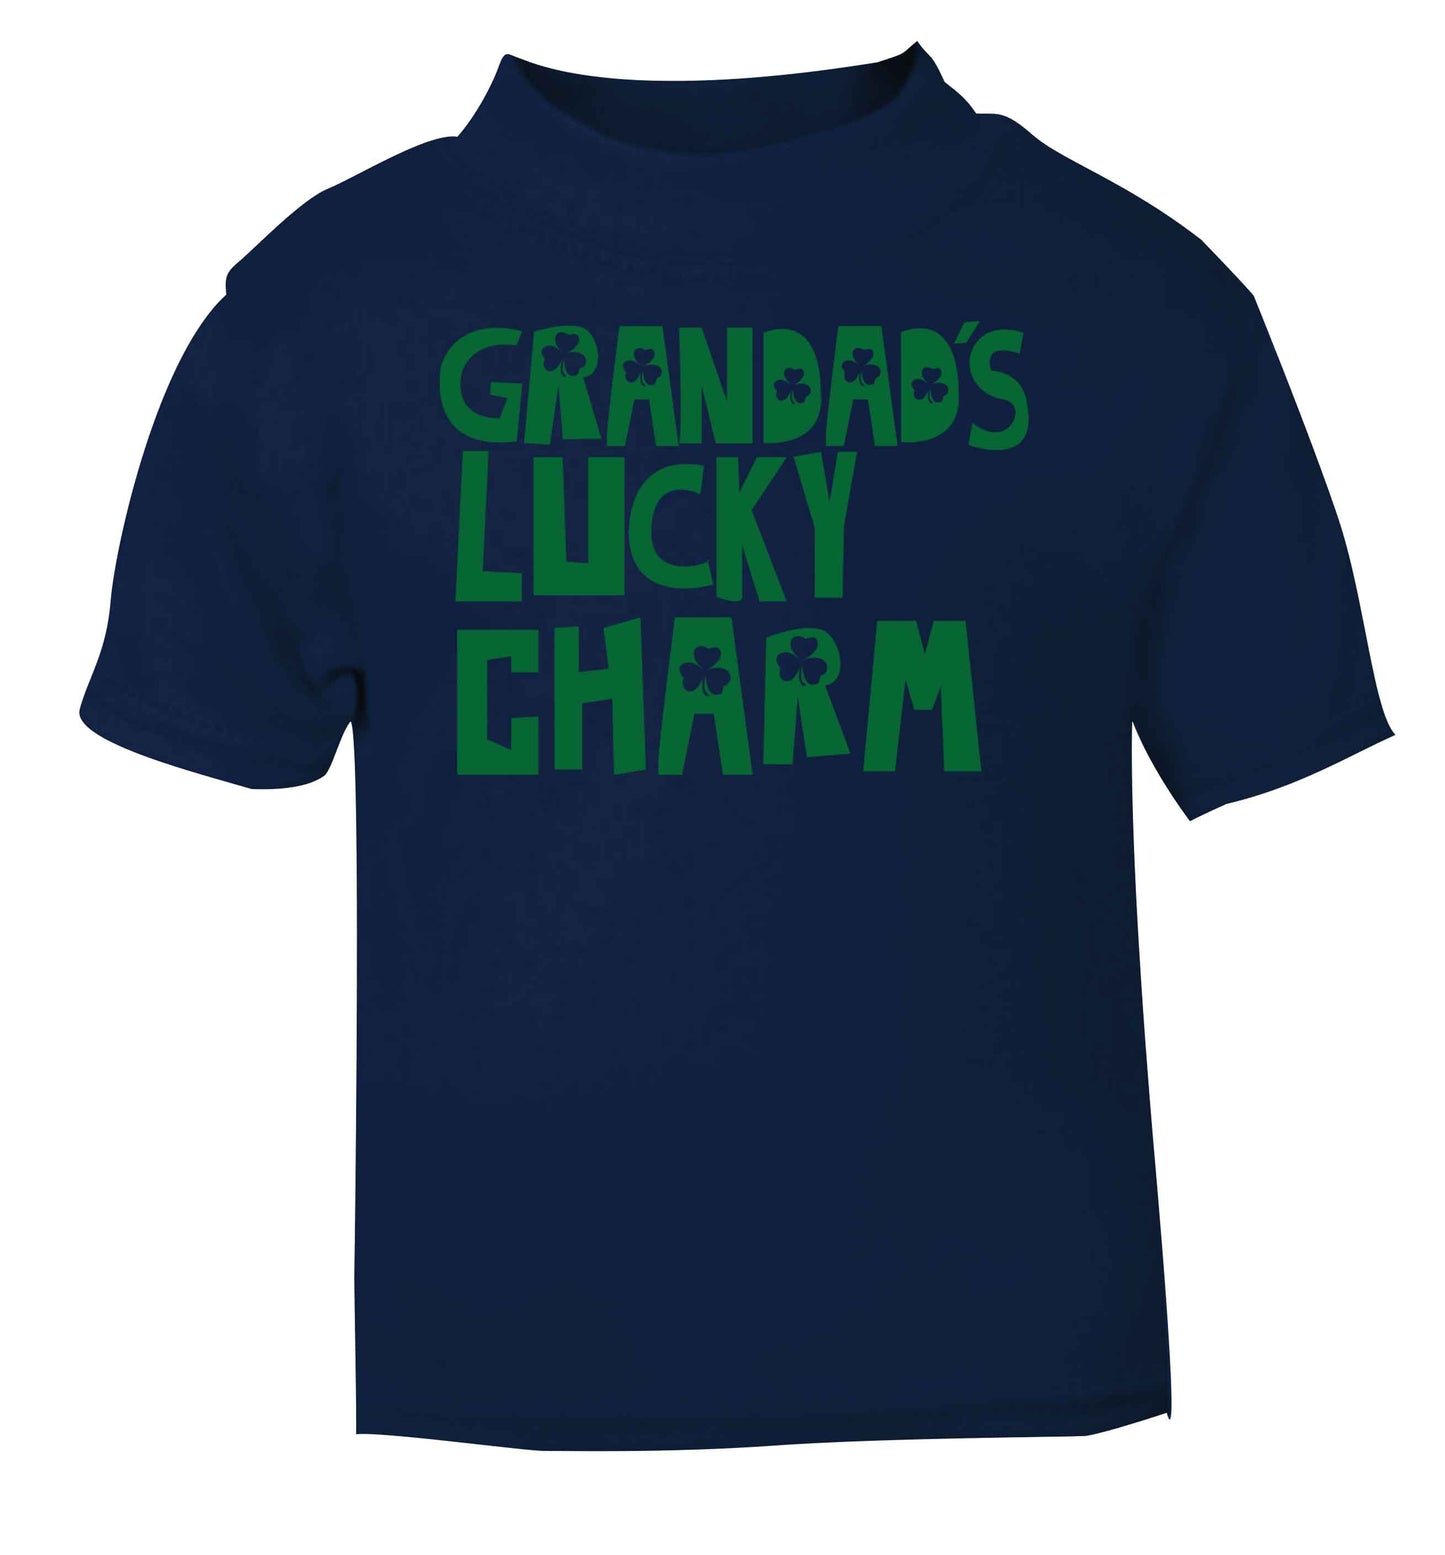 Grandad's lucky charm  navy baby toddler Tshirt 2 Years